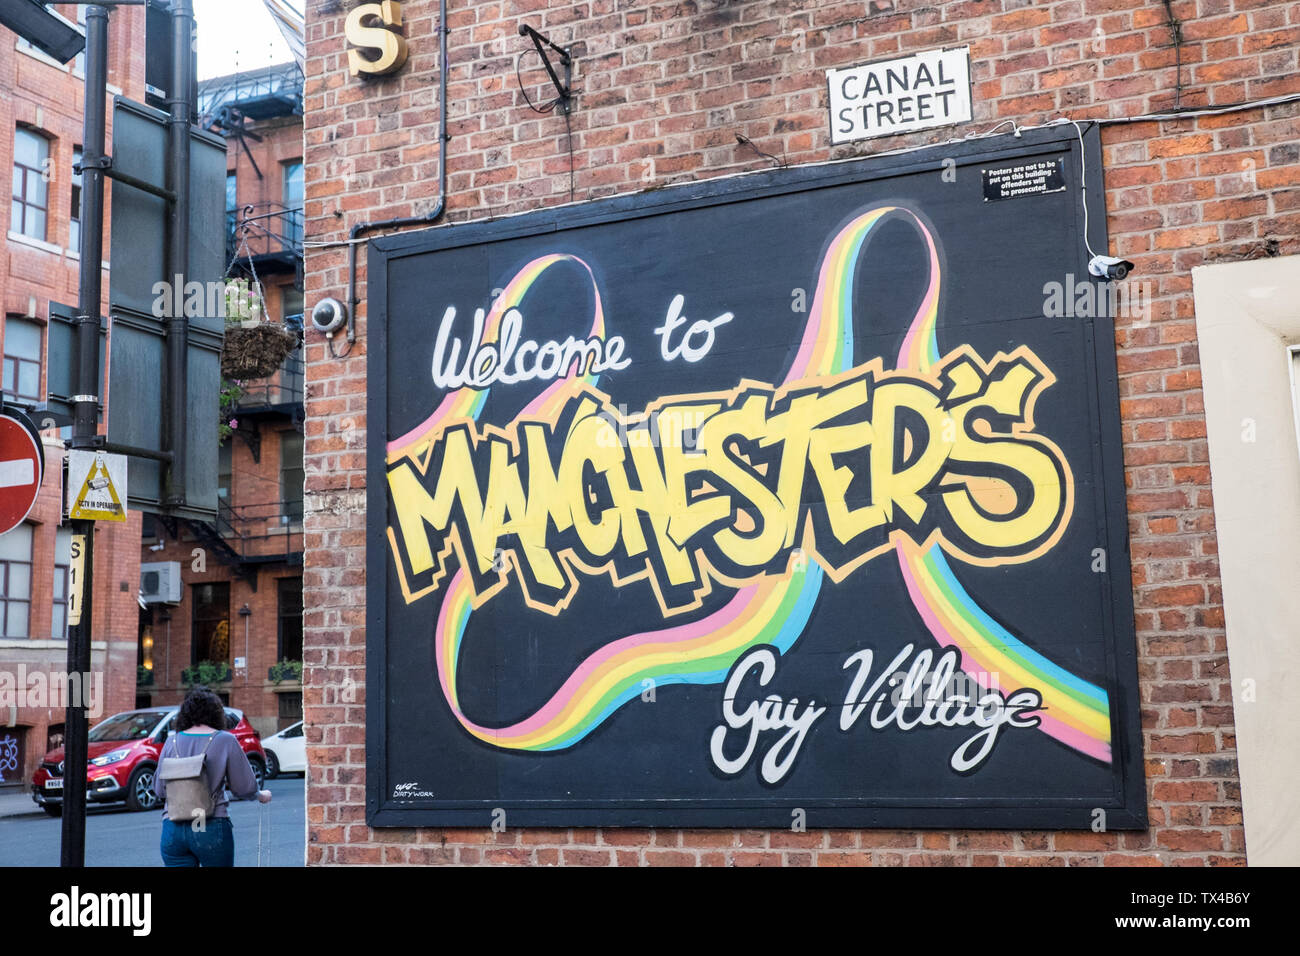 Manchester's,Gay Village,Manchester's Gay Village,Canal Street,Manchester,north,northern,north west,city,England,English,GB,UK,Britain,British,Europe, Stock Photo